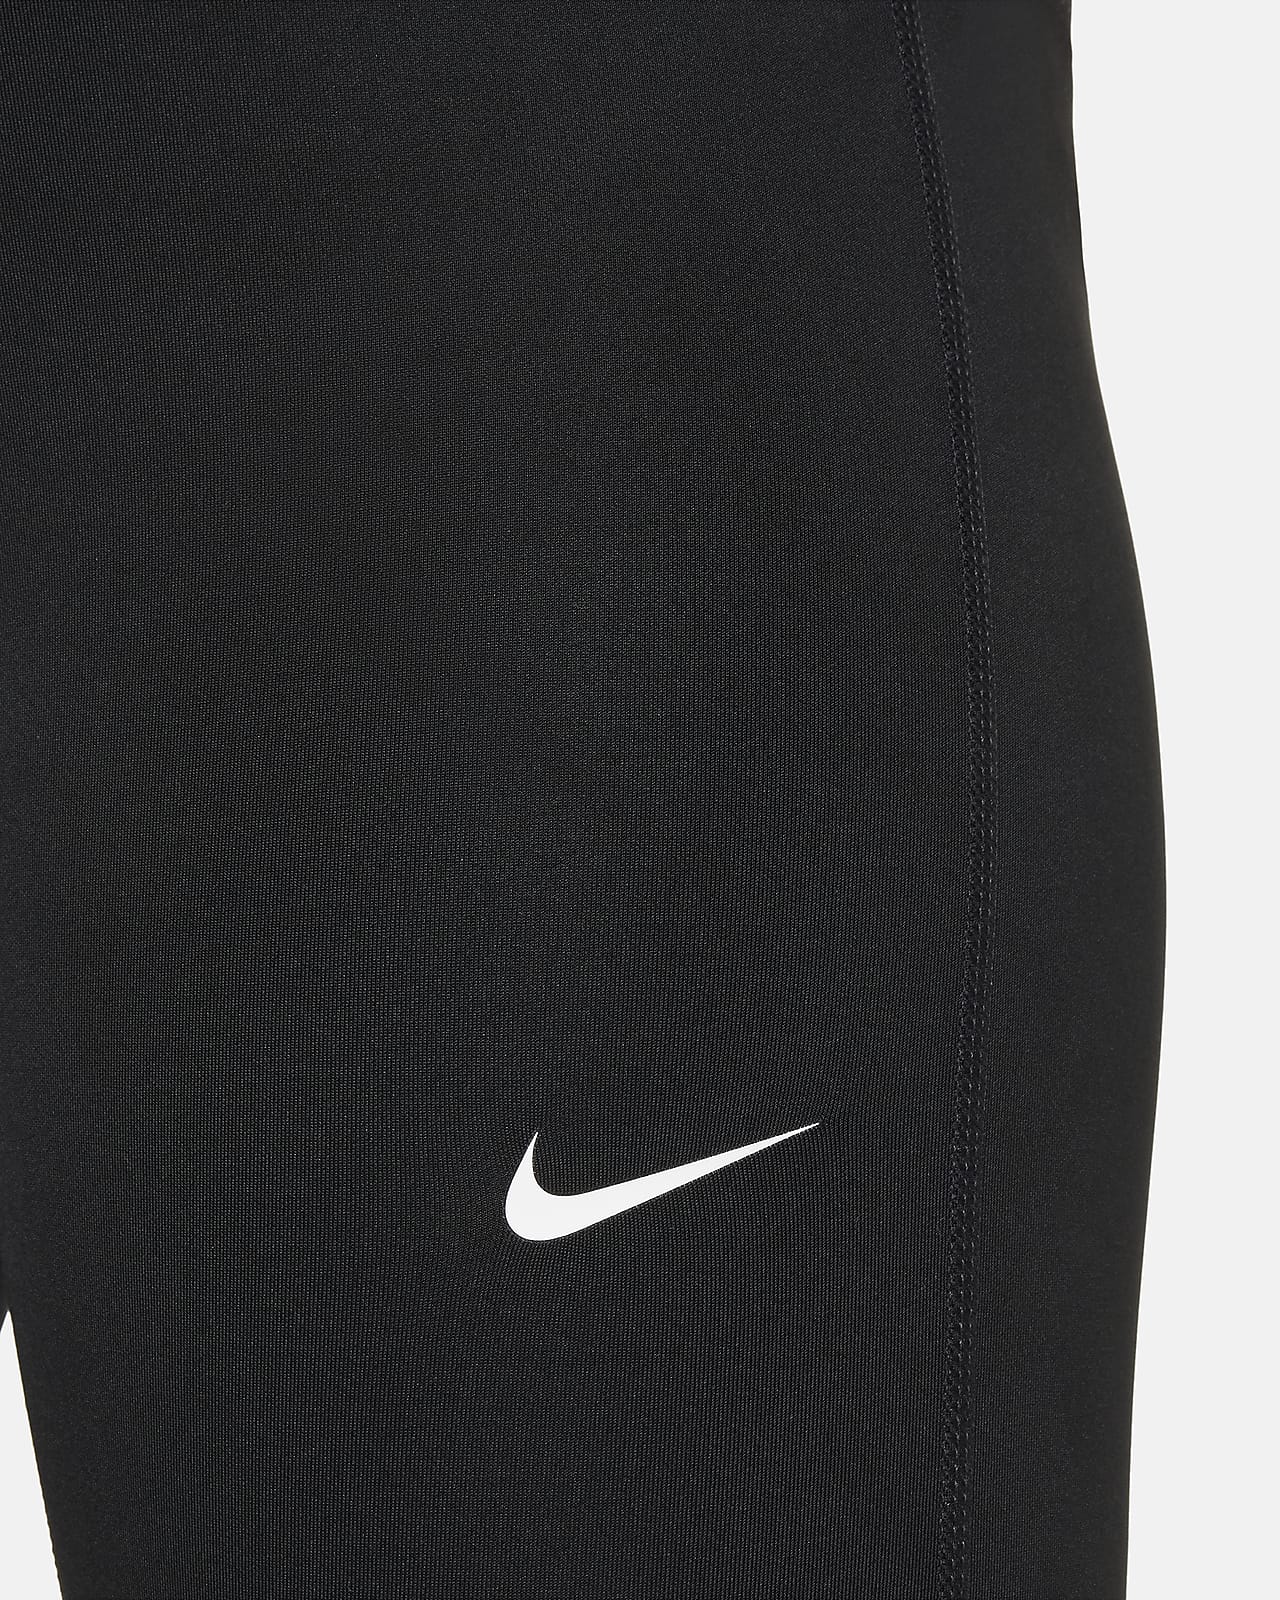 Nike Pro Dri-FIT Older Kids' (Girls') Leggings (Extended Size). Nike IE